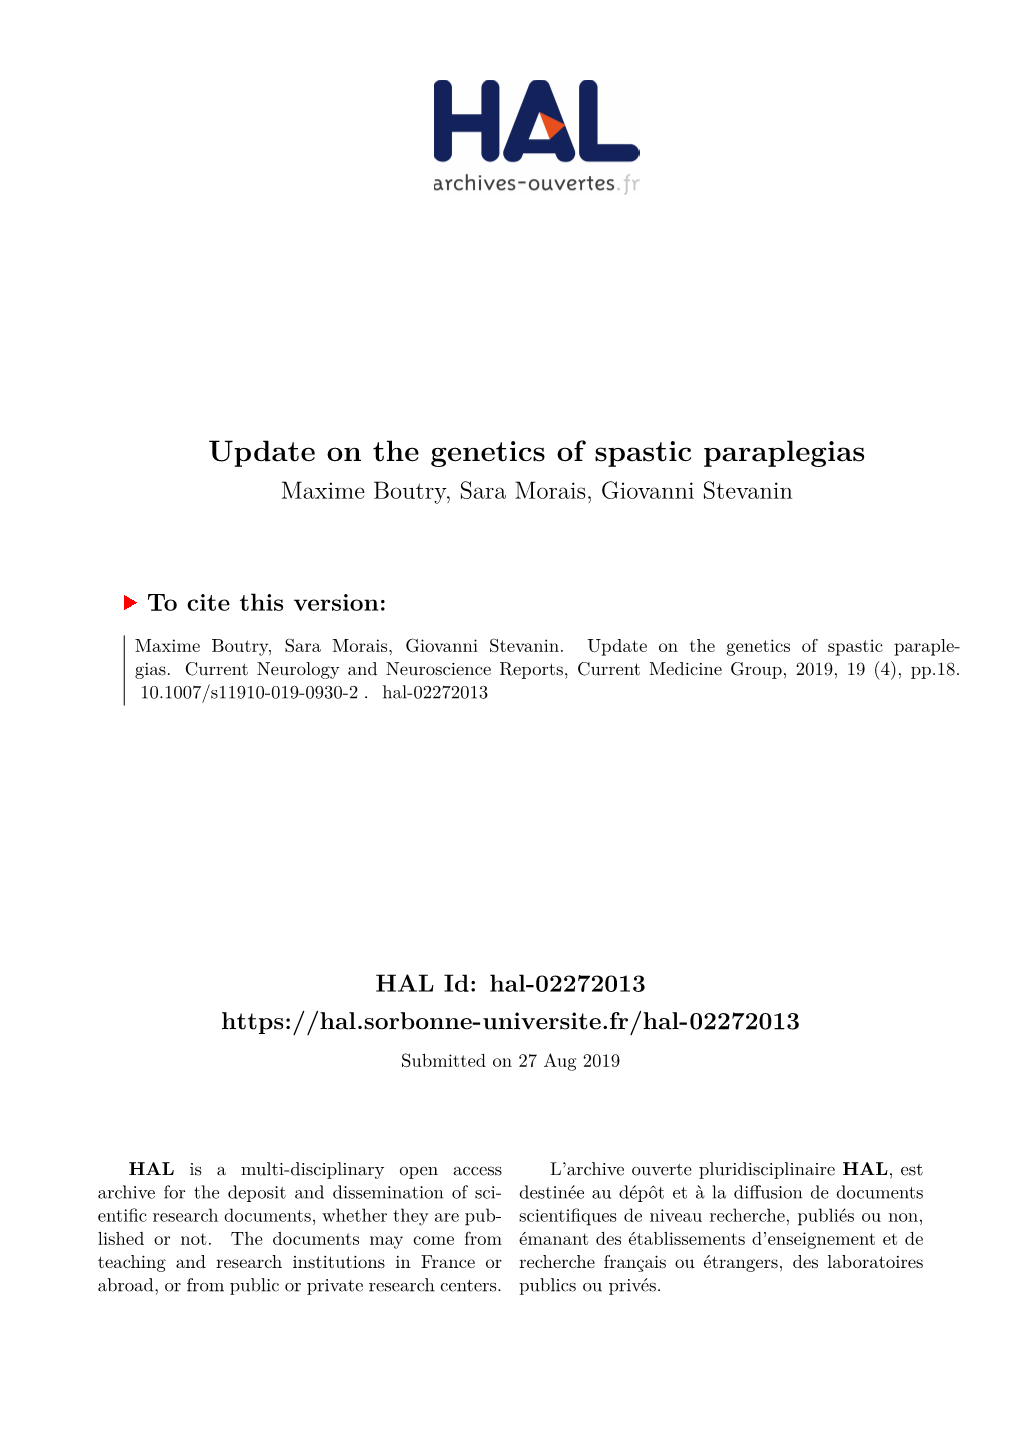 Update on the Genetics of Spastic Paraplegias Maxime Boutry, Sara Morais, Giovanni Stevanin